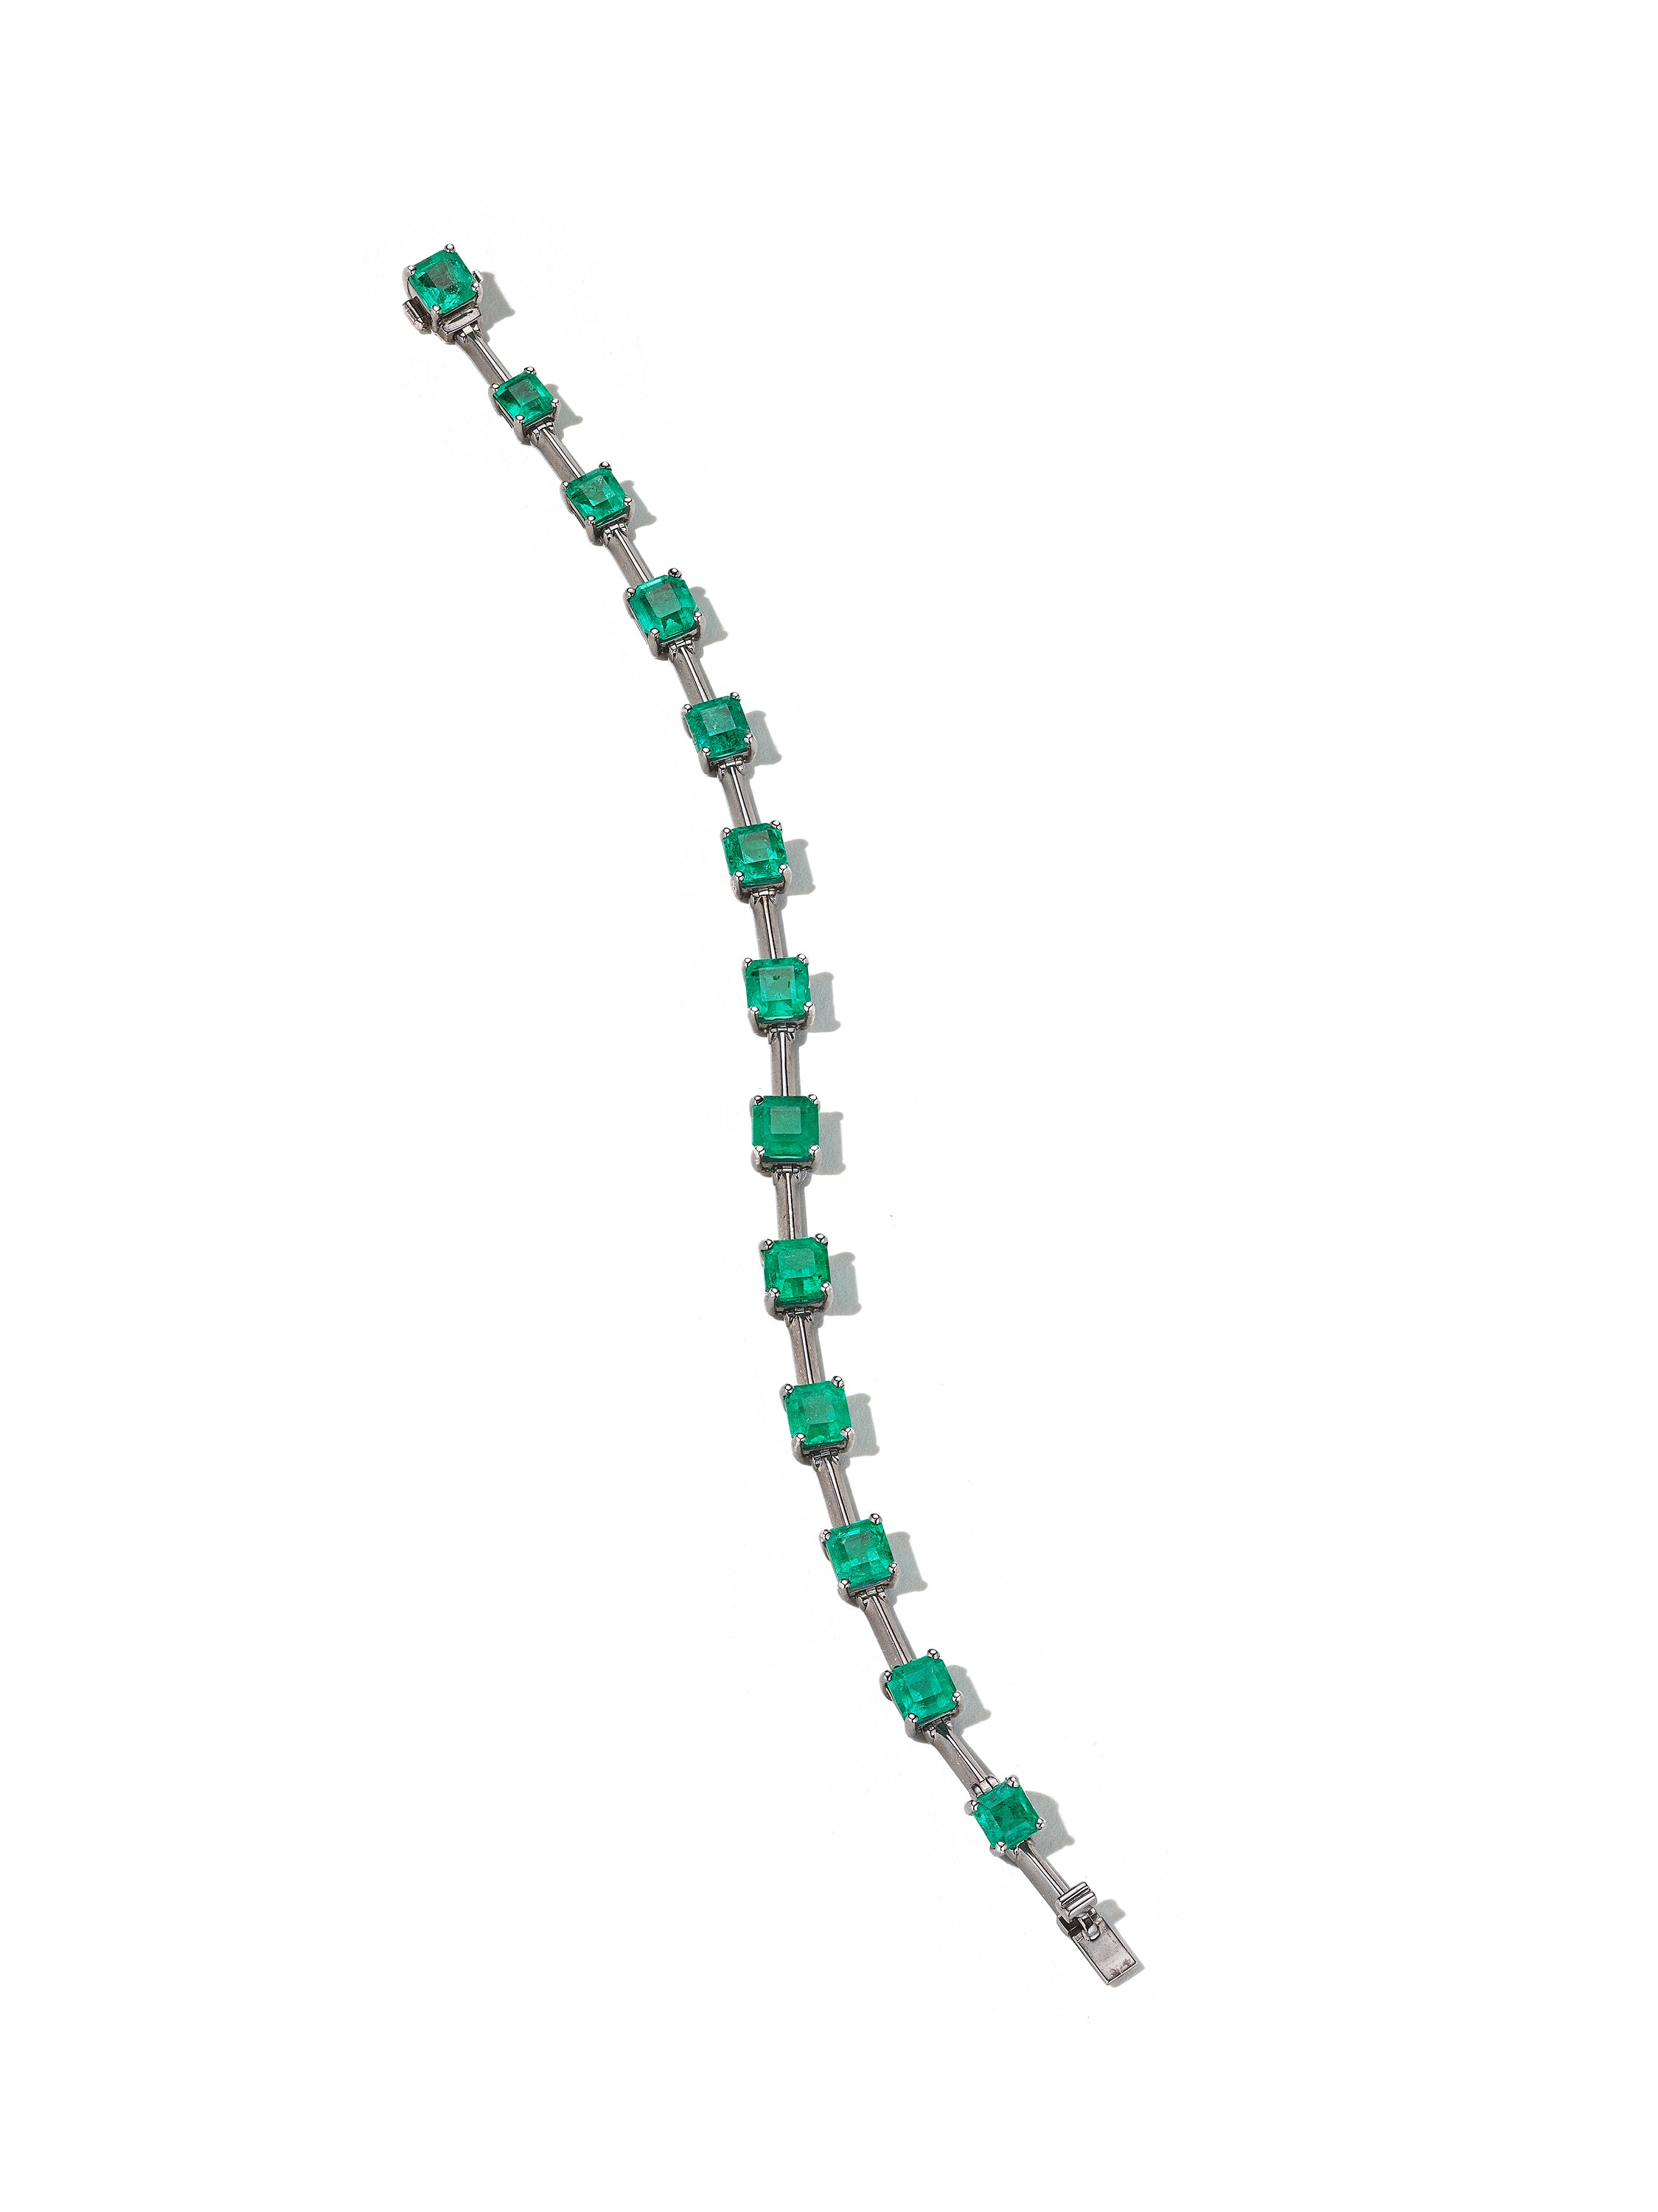 Oxidized 7.71ct Colmbian Emerald Tennis Bracelet